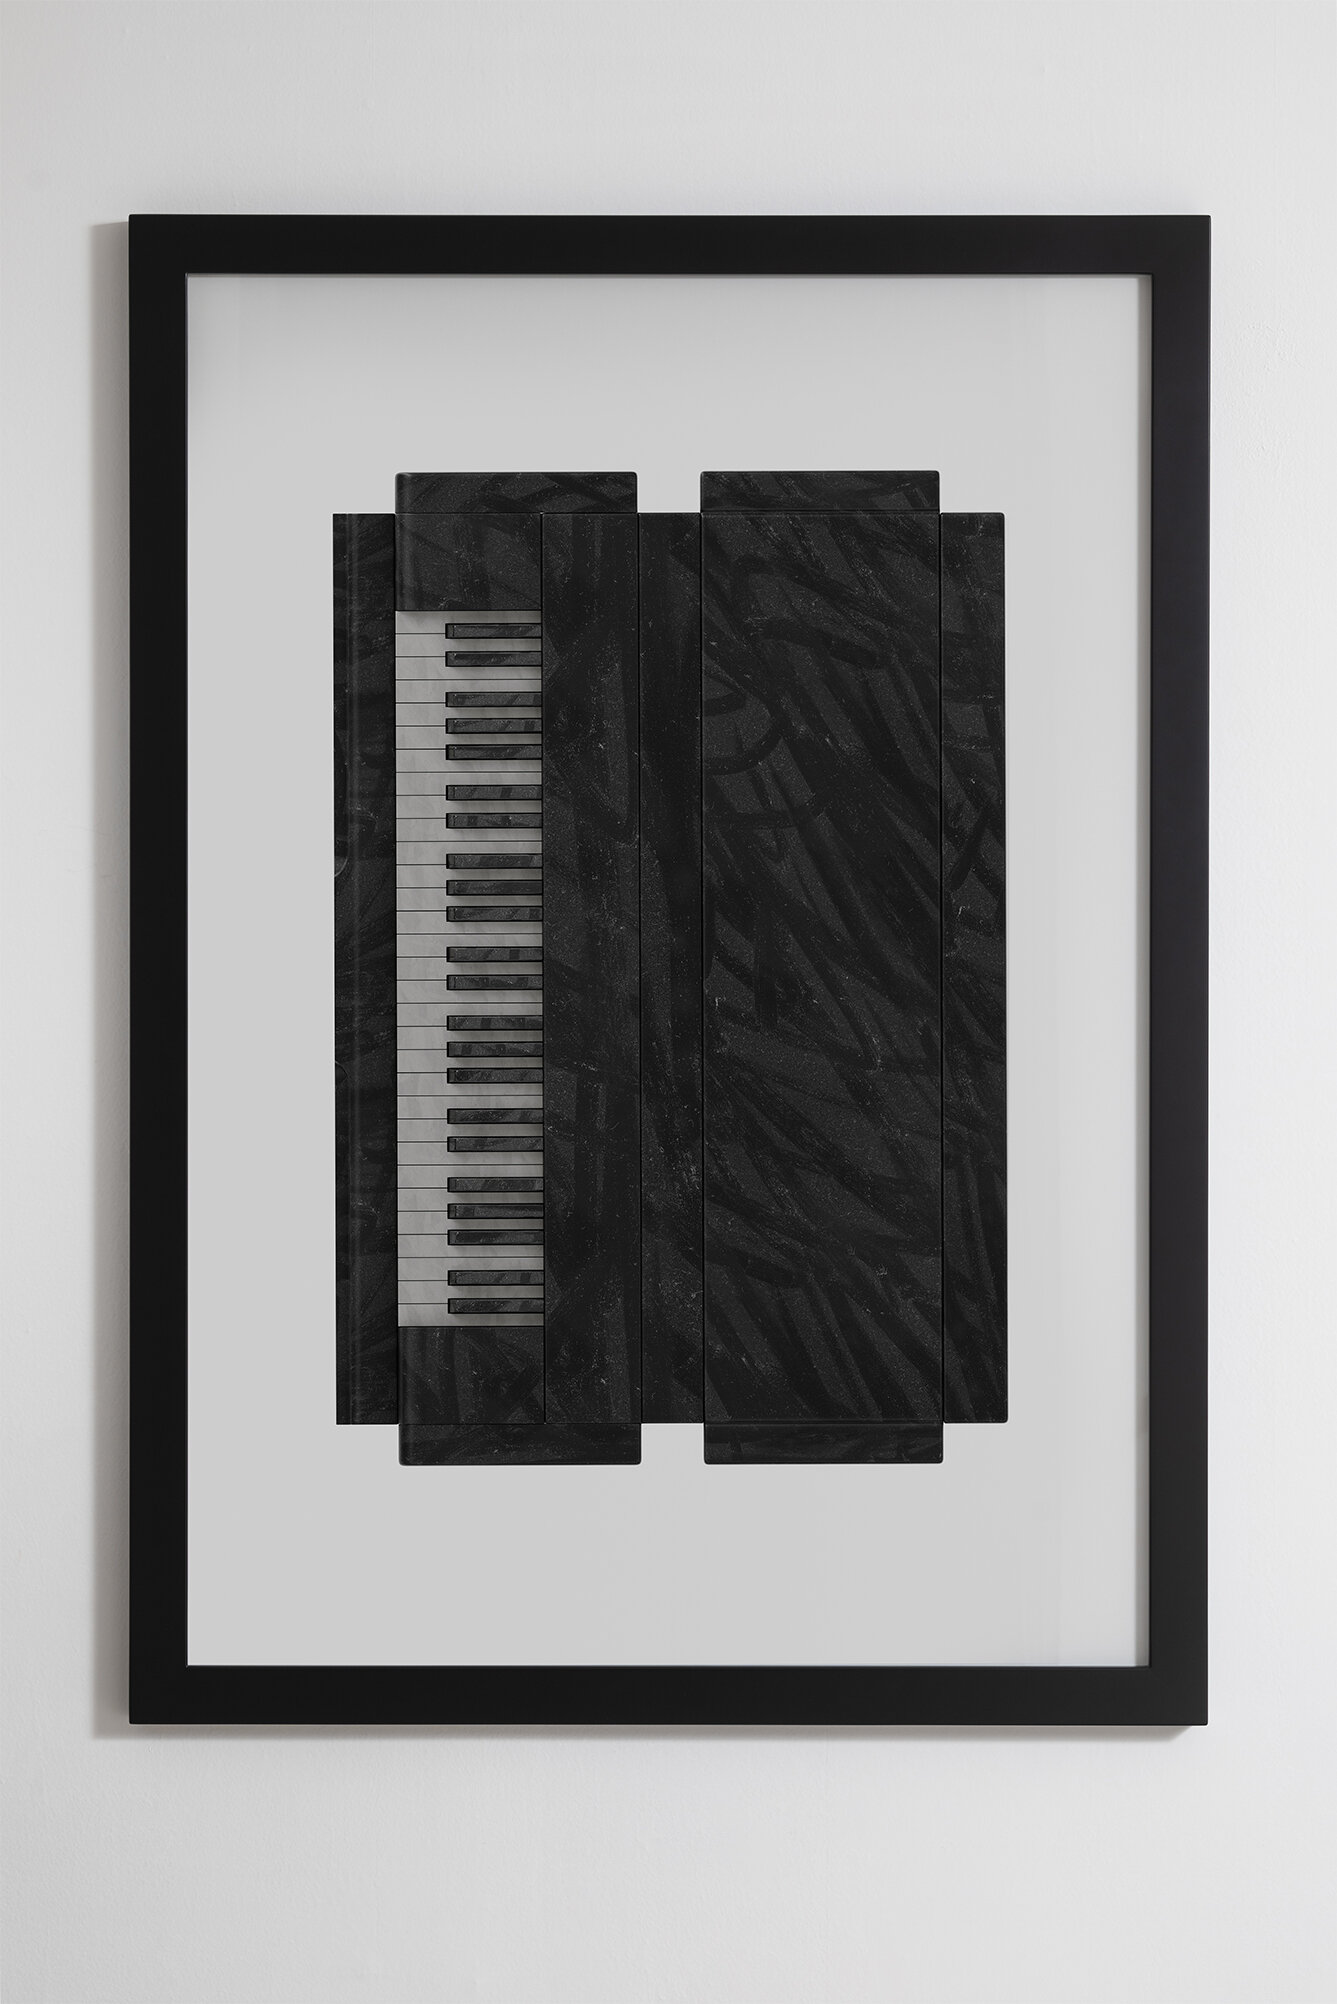   Untitled   2020, digital sculpture, inkjet printed on paper in artist’s frame (sprayed black semi-matt wood), 155 × 111 × 4.5 cm 